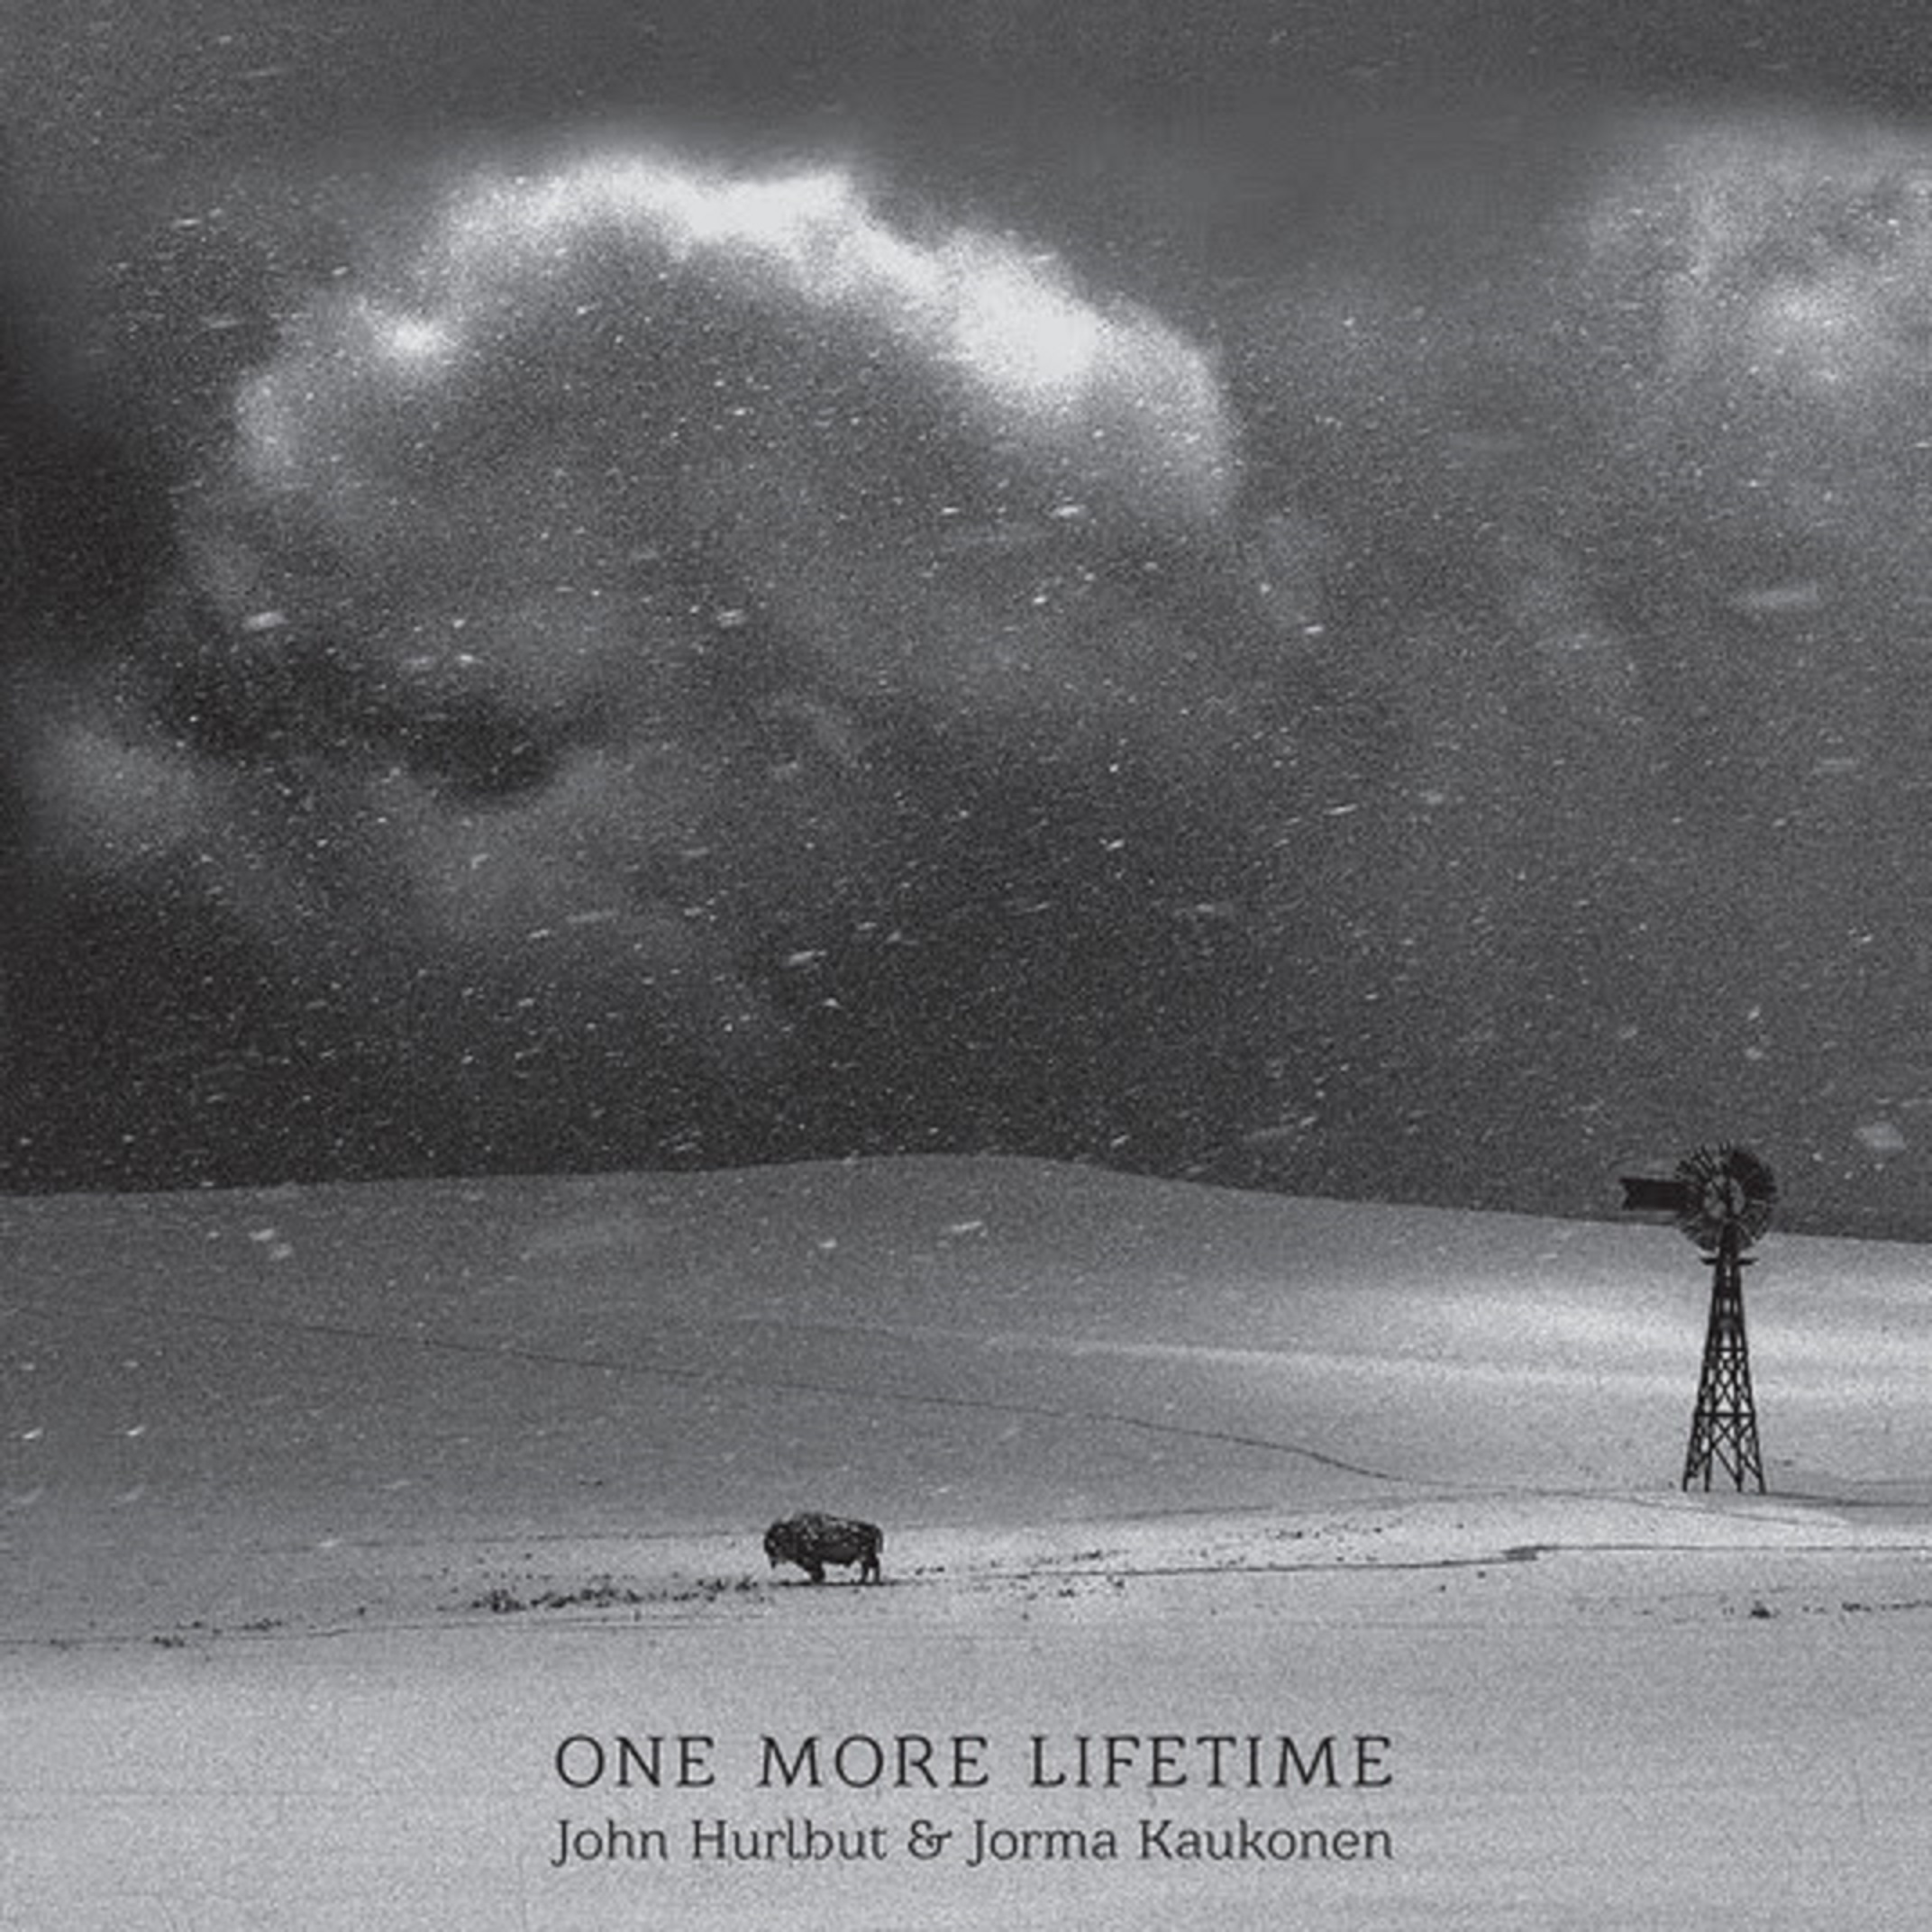 Jorma Kaukonen and John Hurlbut celebrate the release of One More Lifetime